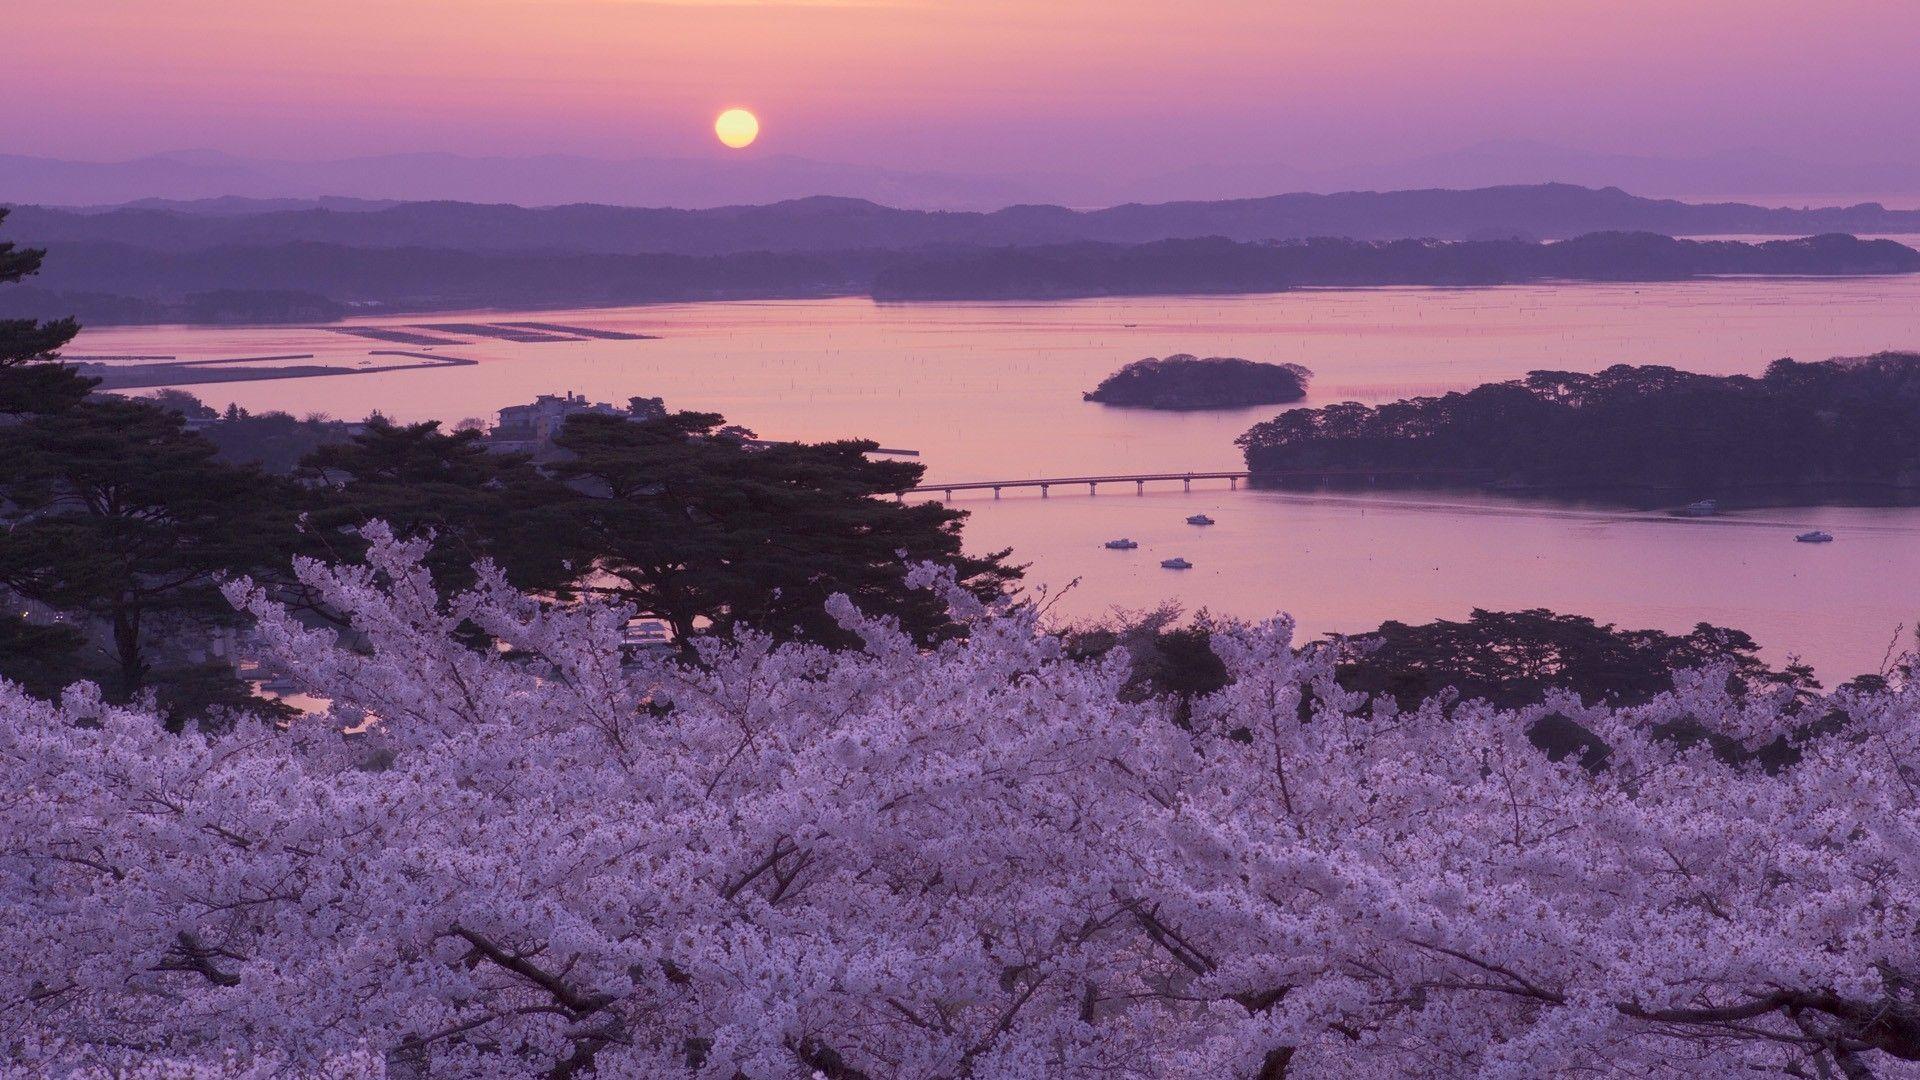 Japan Cherry Blossom Desktop Wallpapers Top Free Japan Cherry